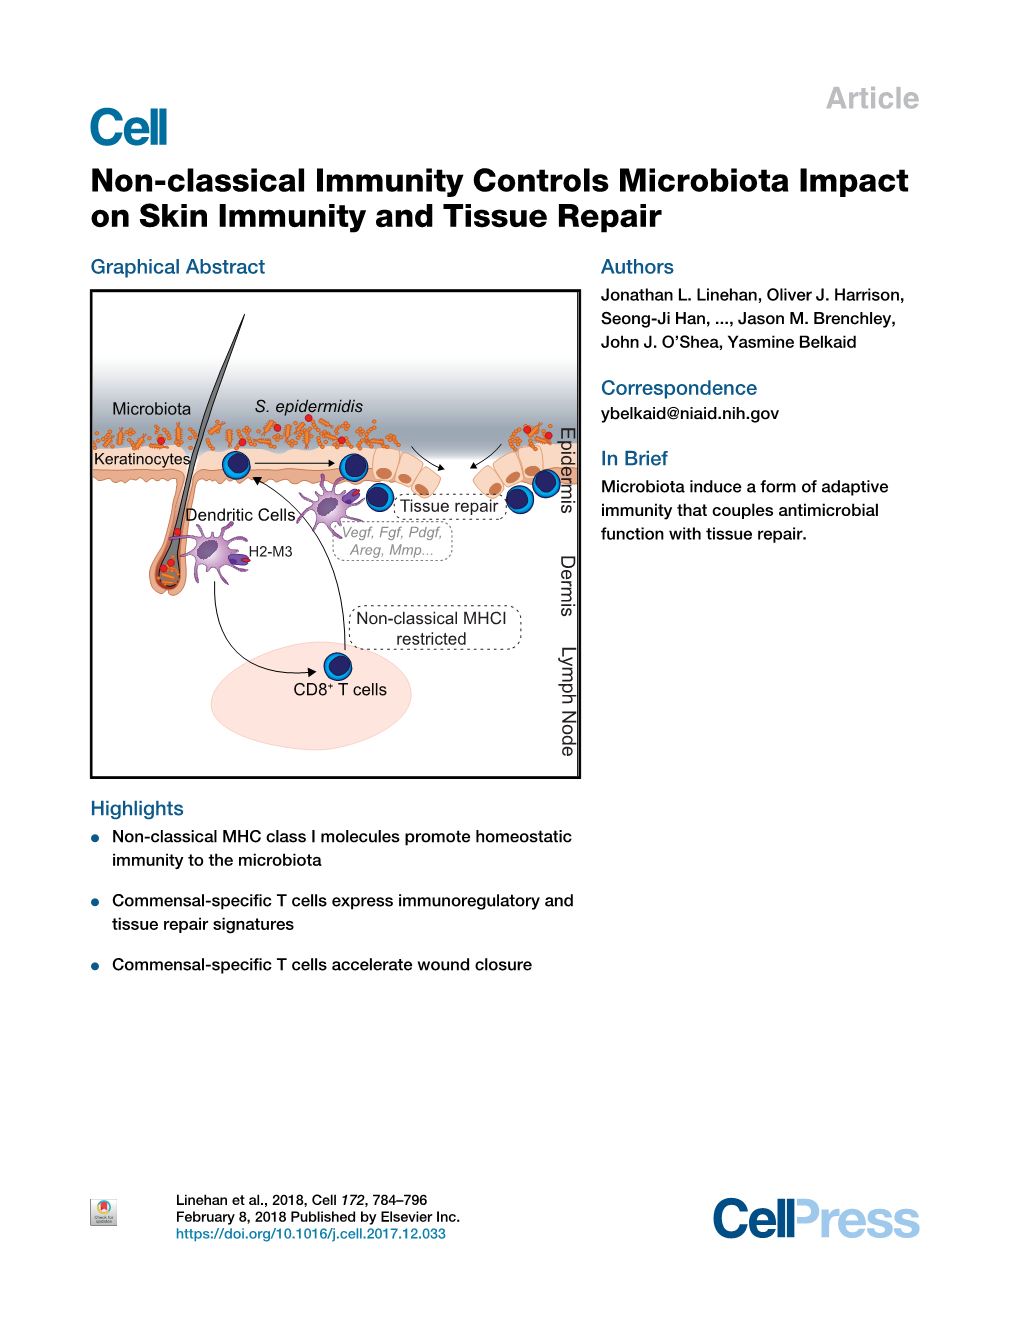 Non-Classical Immunity Controls Microbiota Impact on Skin Immunity and Tissue Repair